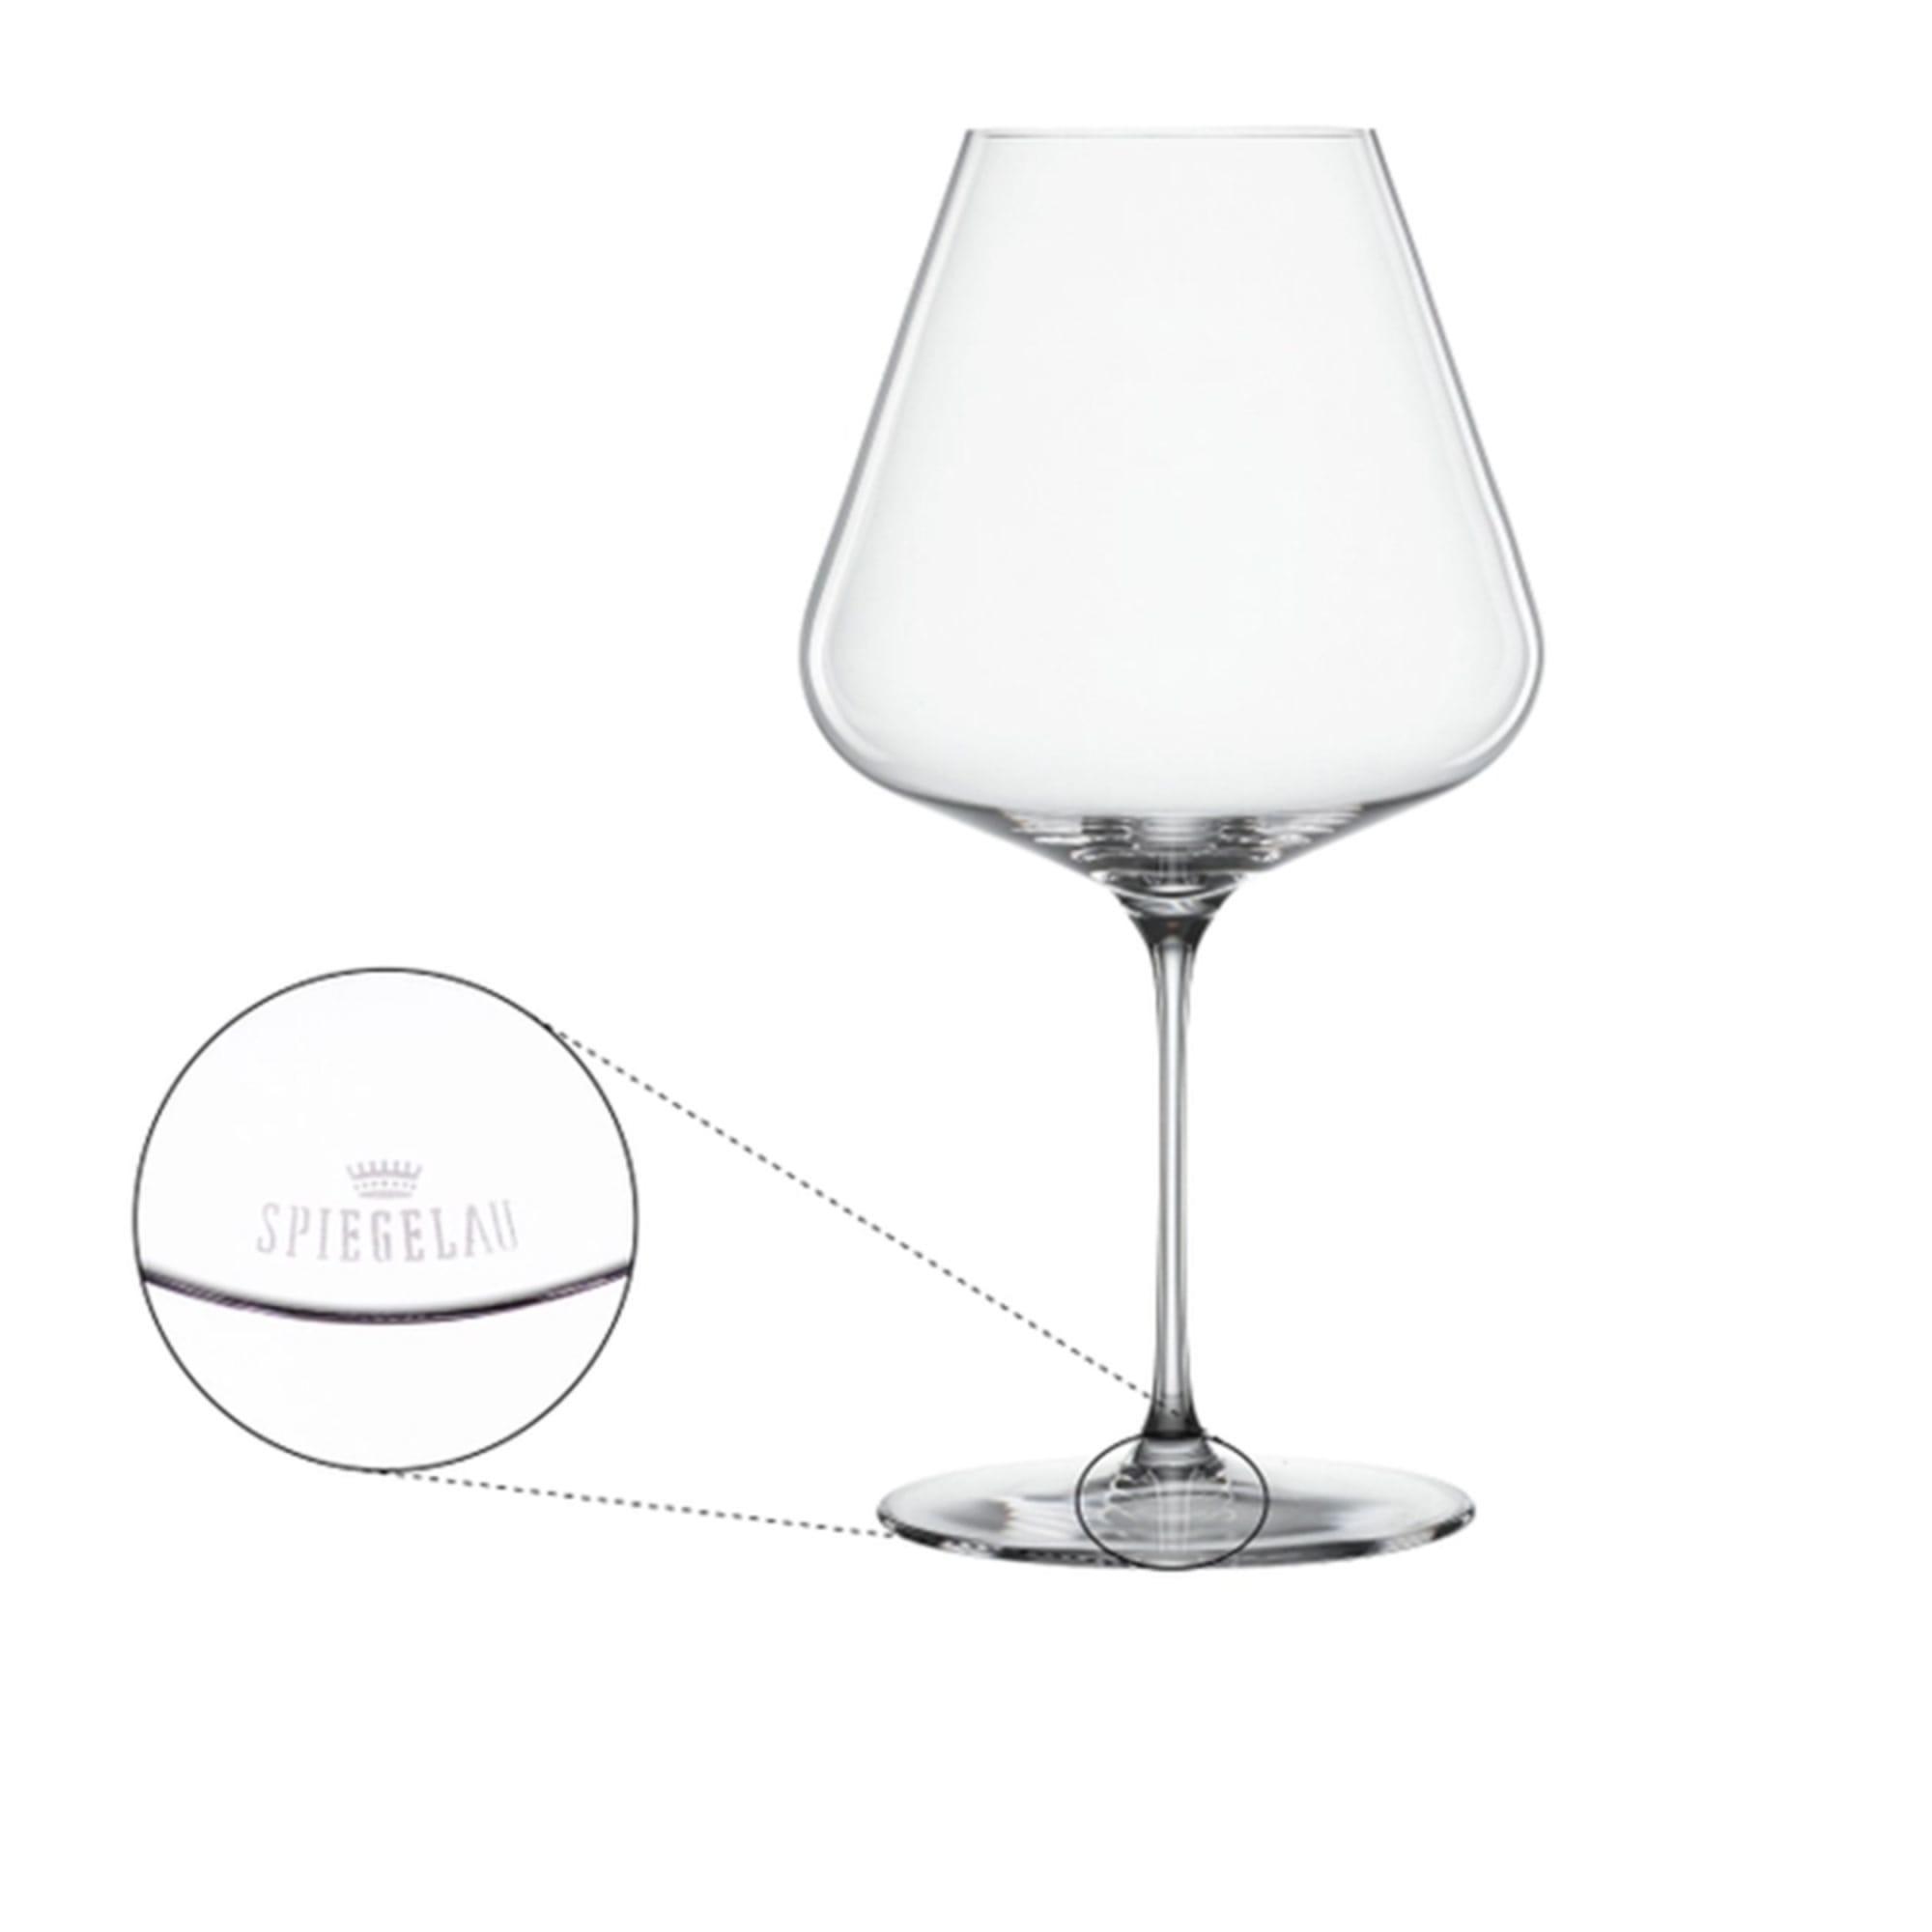 Spiegelau Definition Burgundy Glass 960ml Set of 6 Image 4